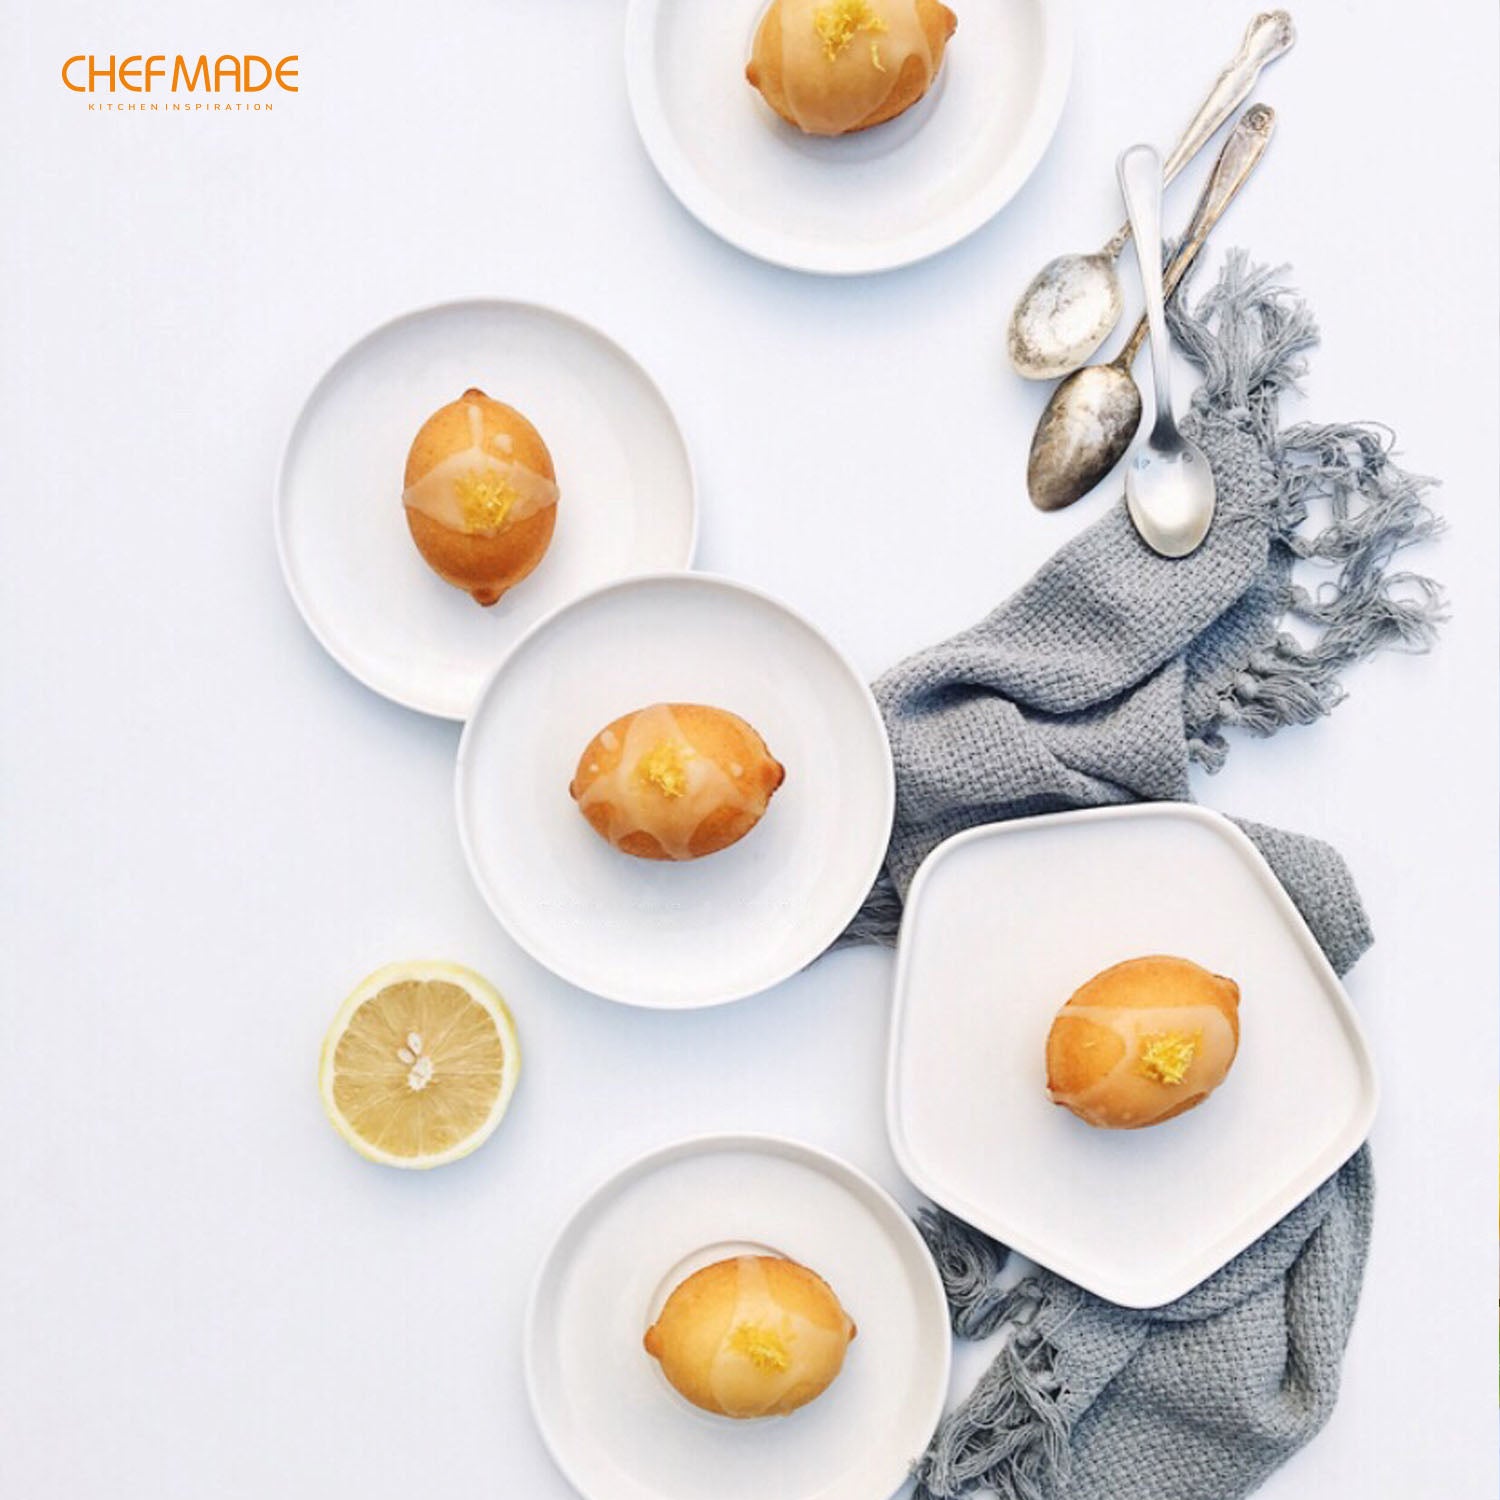 CHEFMADE Muffin Cake pan, 12-Cavity Non-Stick Lemon-Shaped Bakeware for  Oven Baking | Wayfair